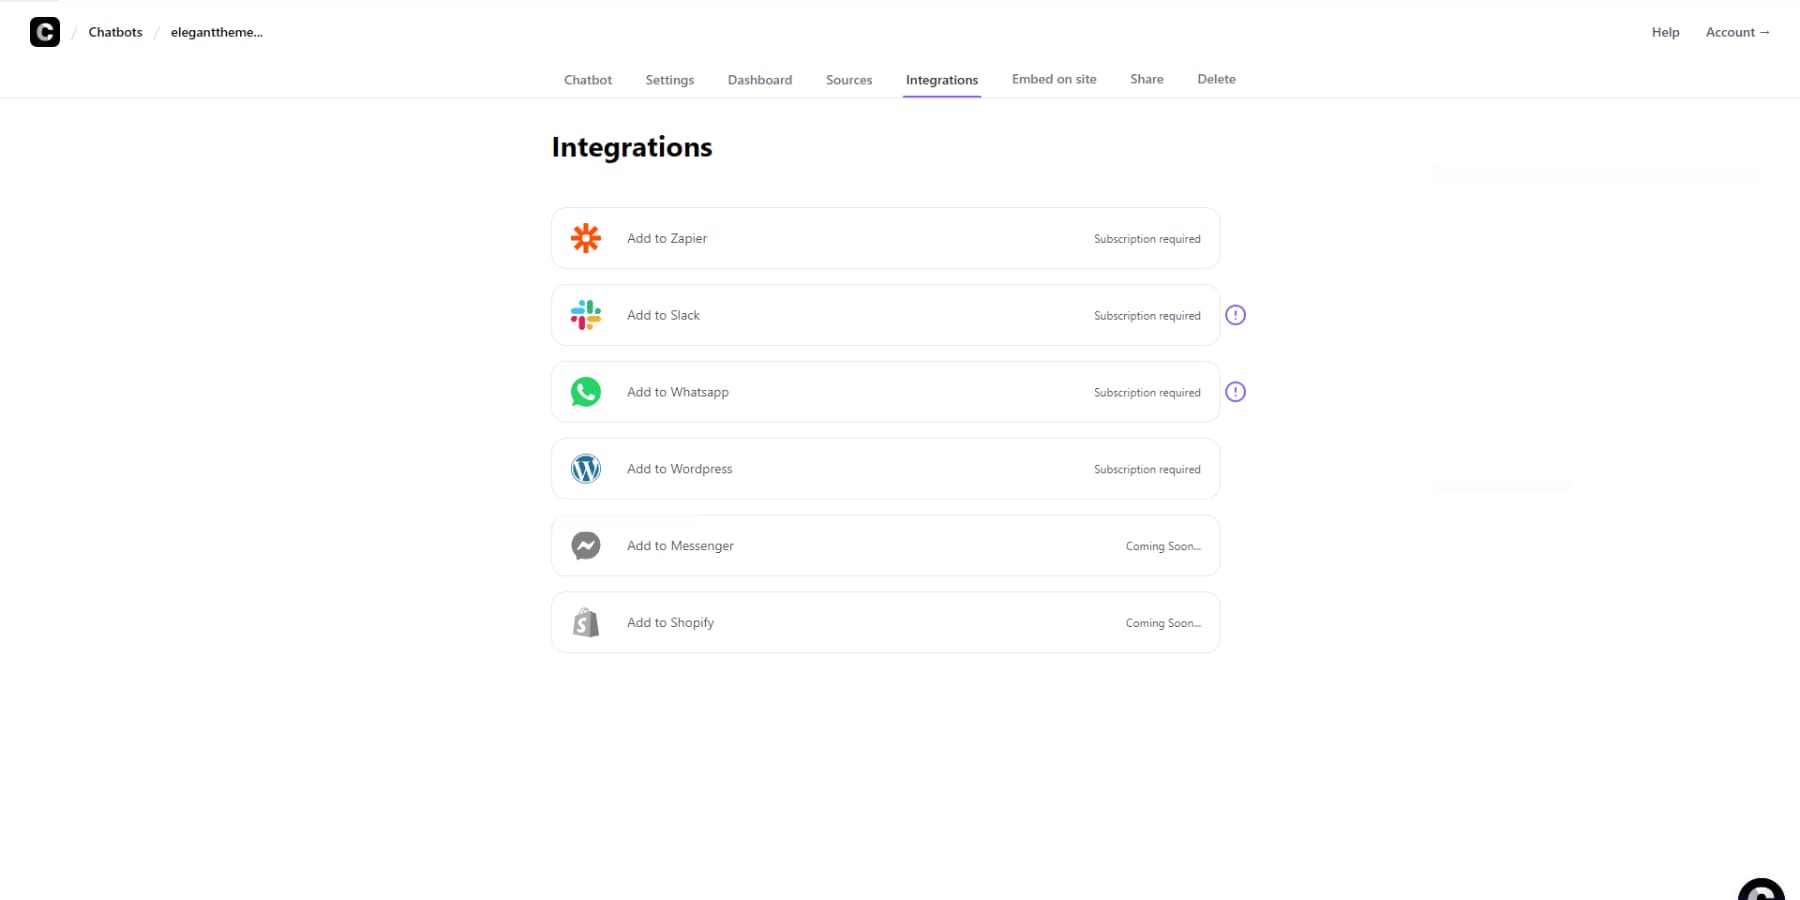 A screenshot of Chatbase's integrations